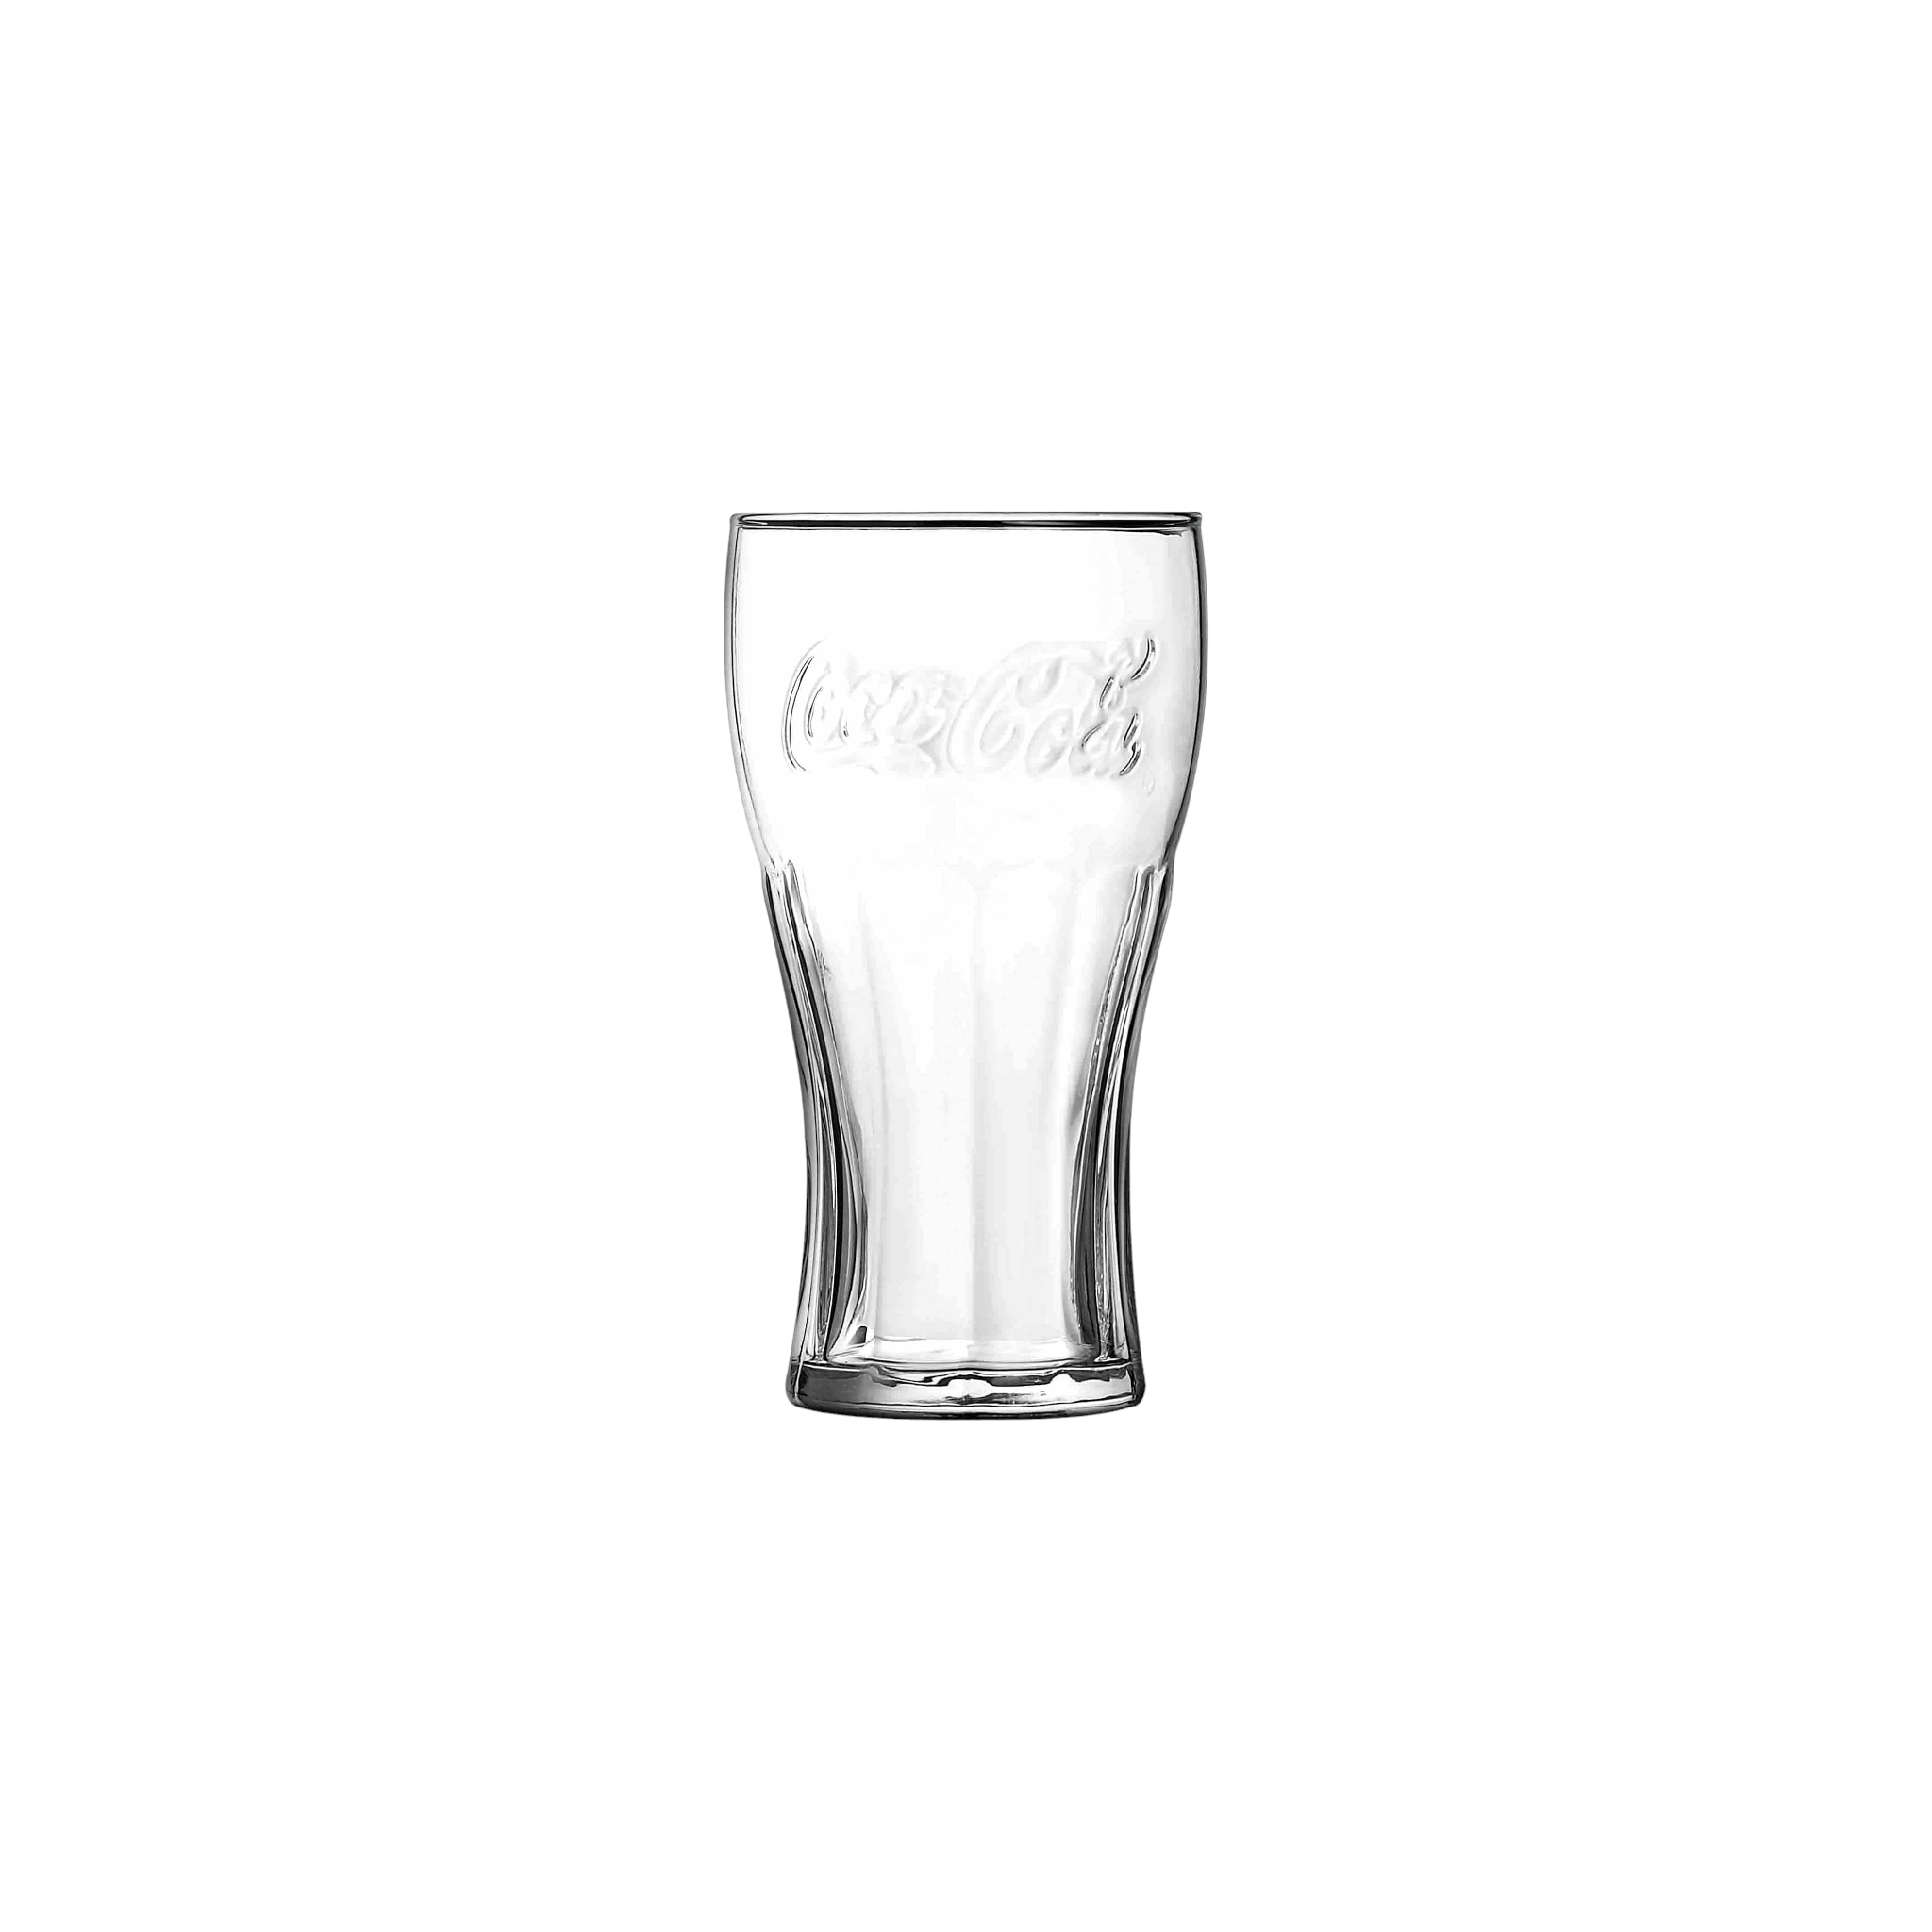 Coke Contour Hiball Glass Tumbler 250ml Pasabahce 6pack 23818